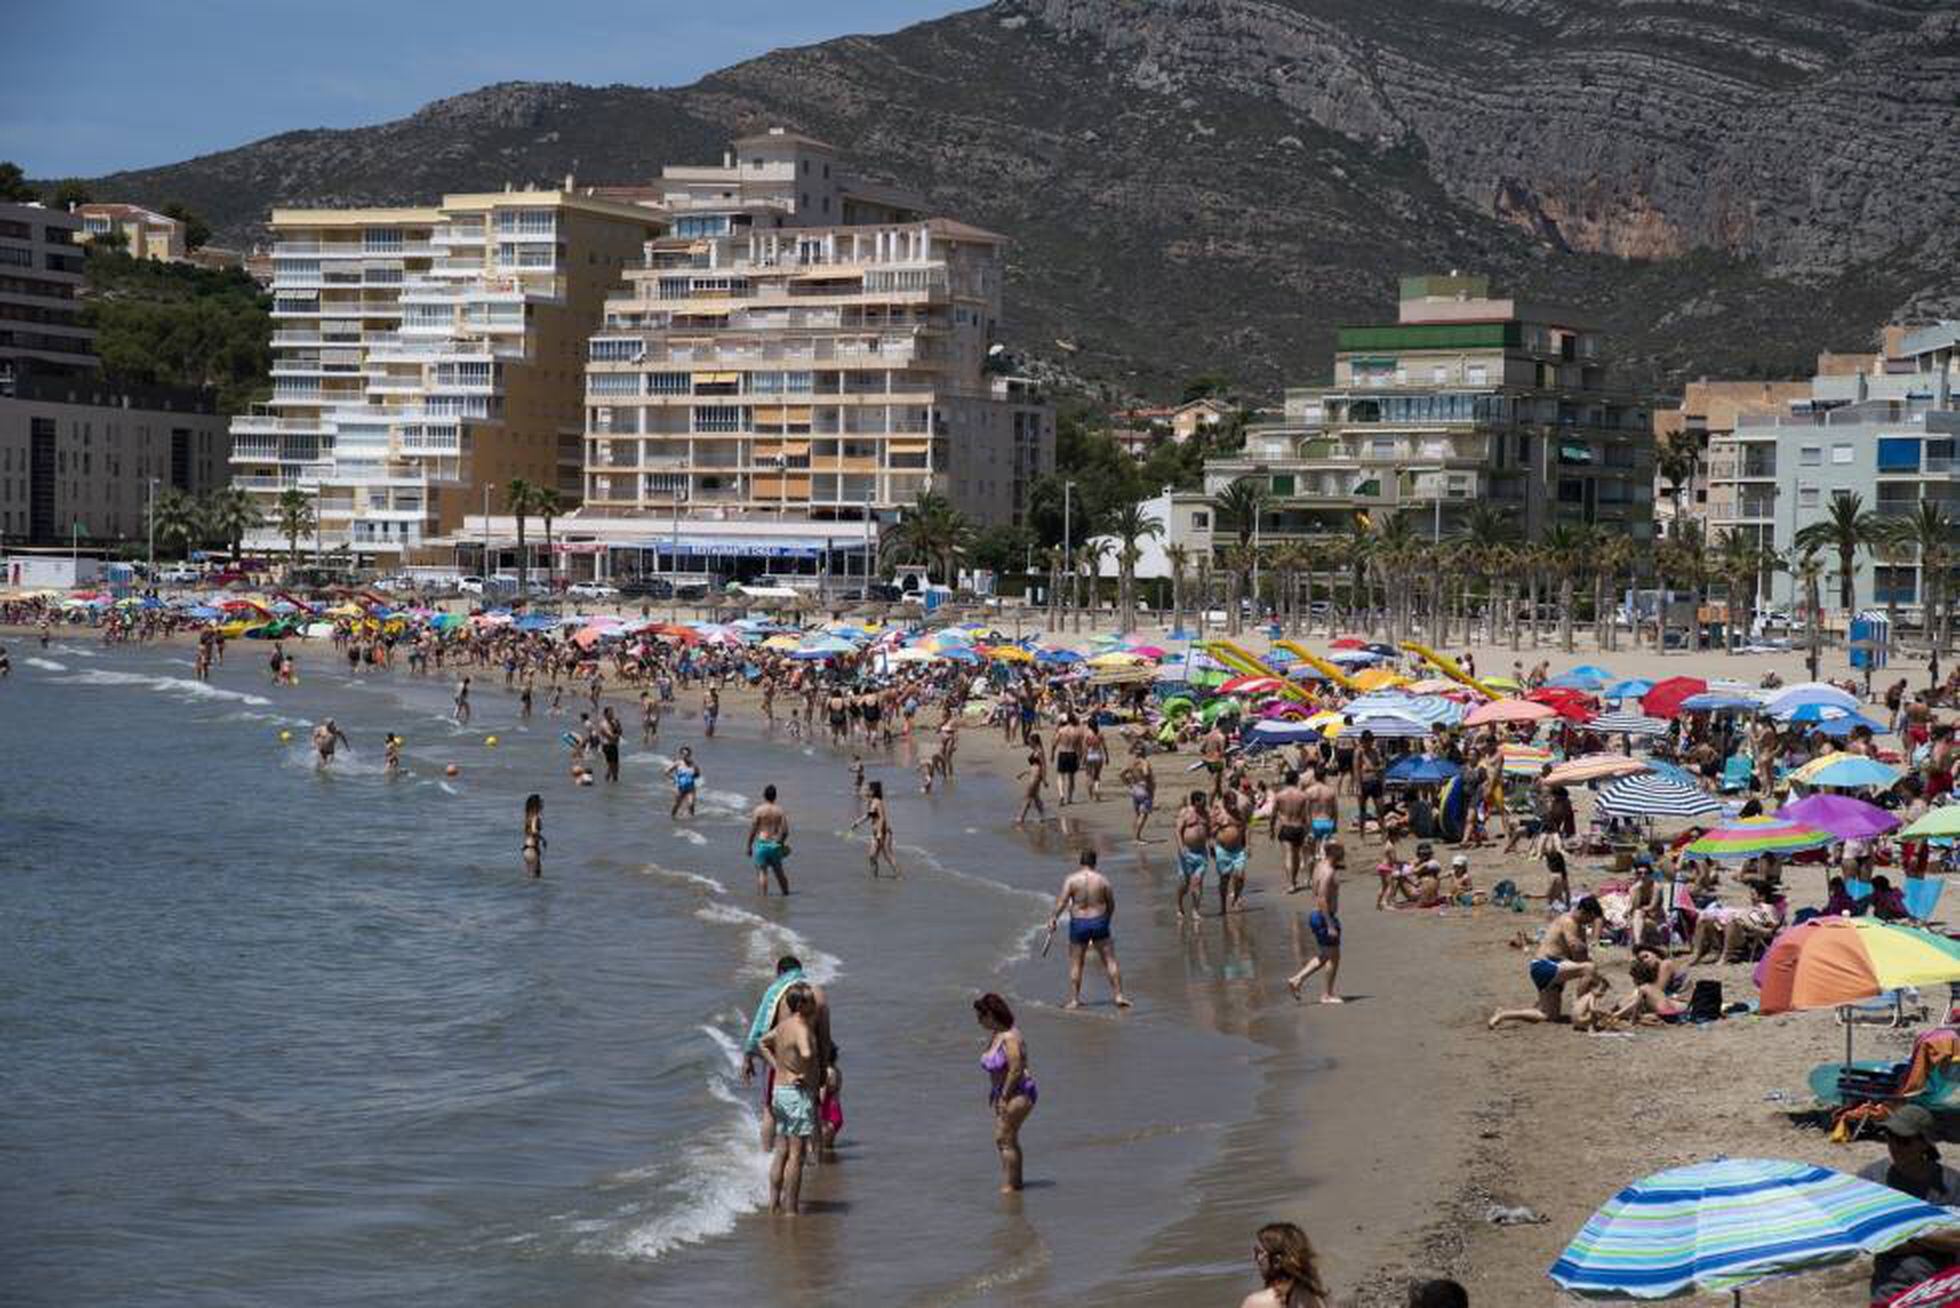 Tourism in Spain: Tourism replaces construction as Spain’s main